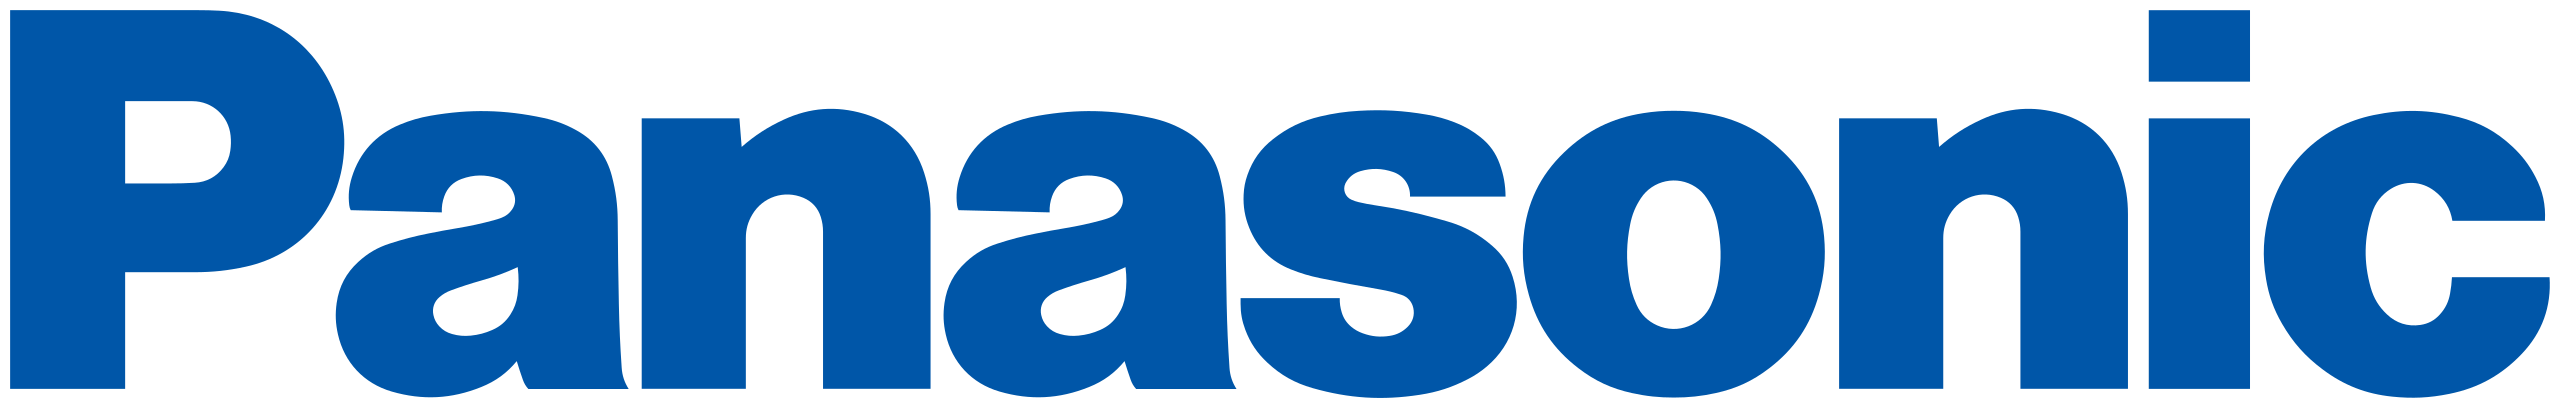 Napier-Heat-Pumps-Panasonic-logo